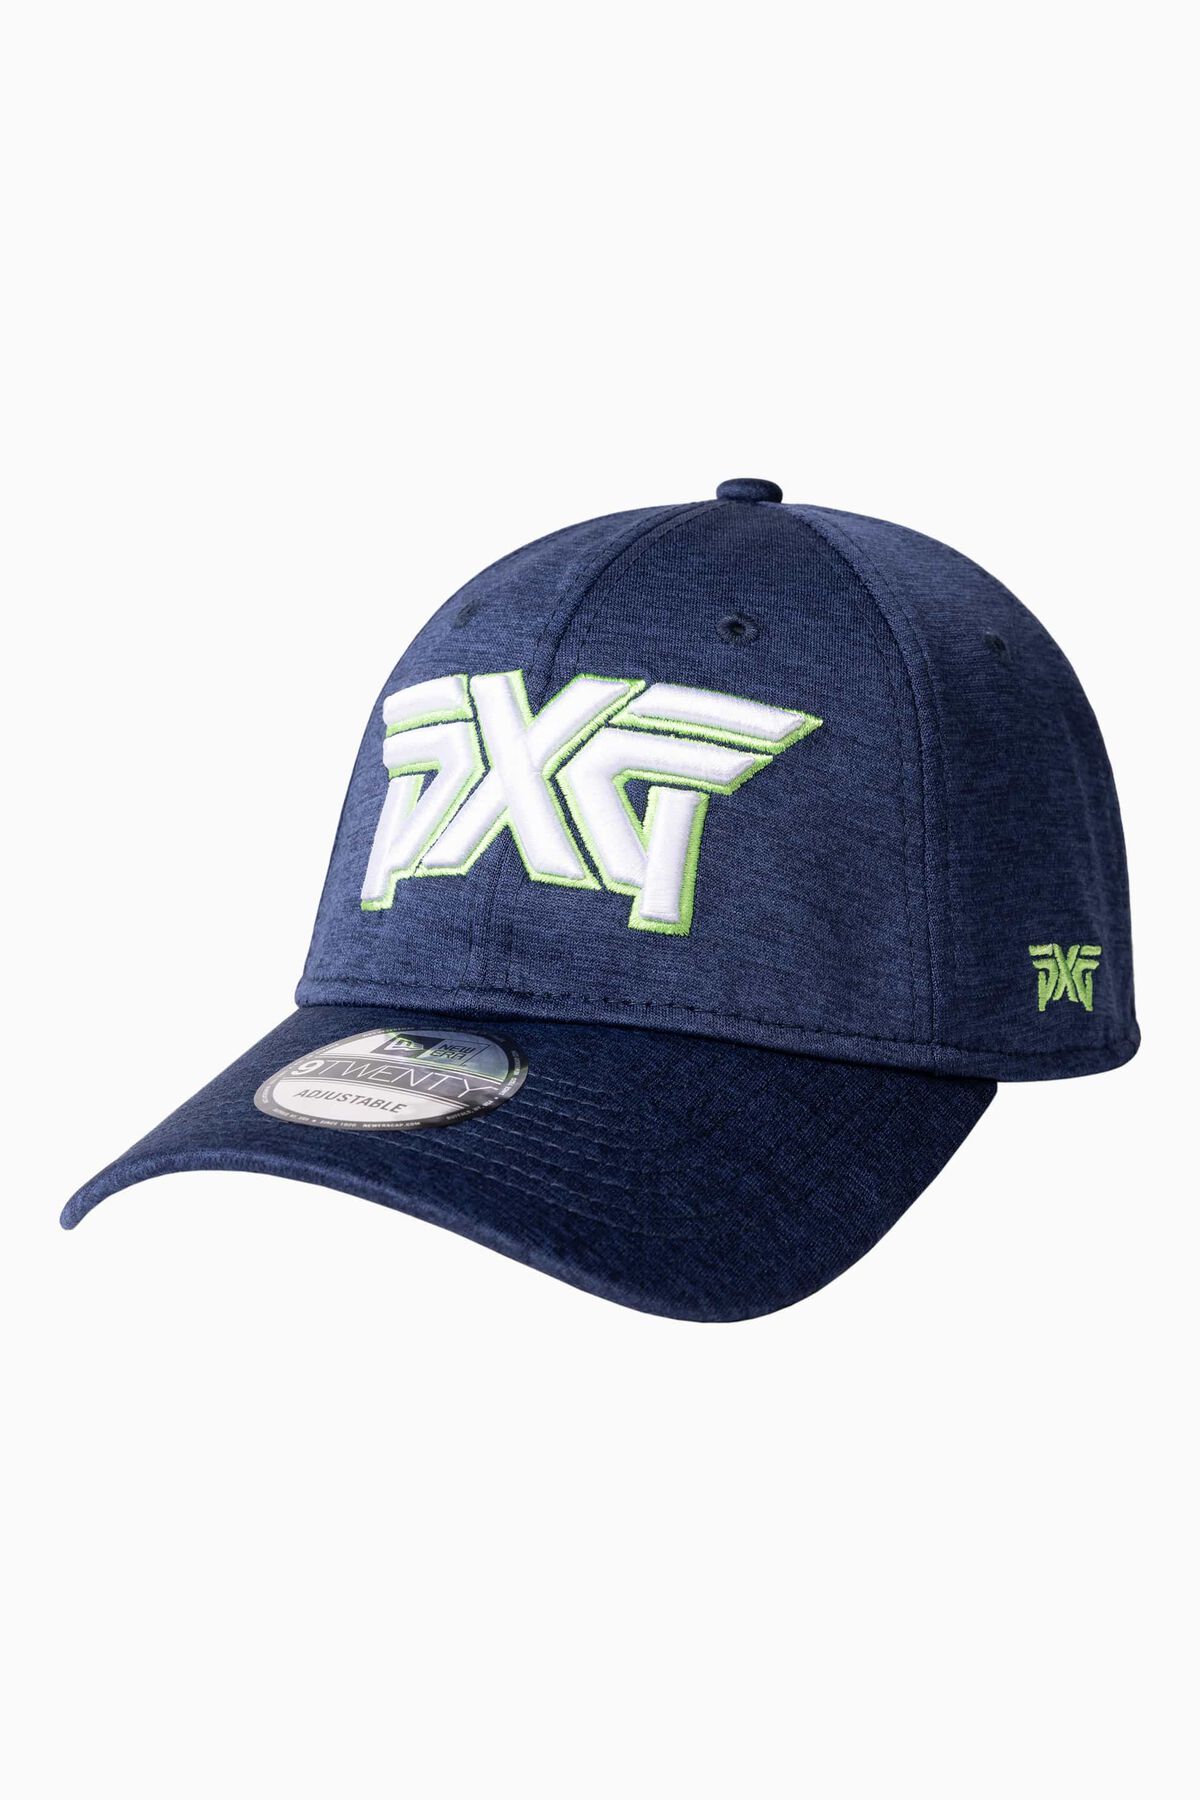 PXG Seattle 9TWENTY Adjustable Cap 